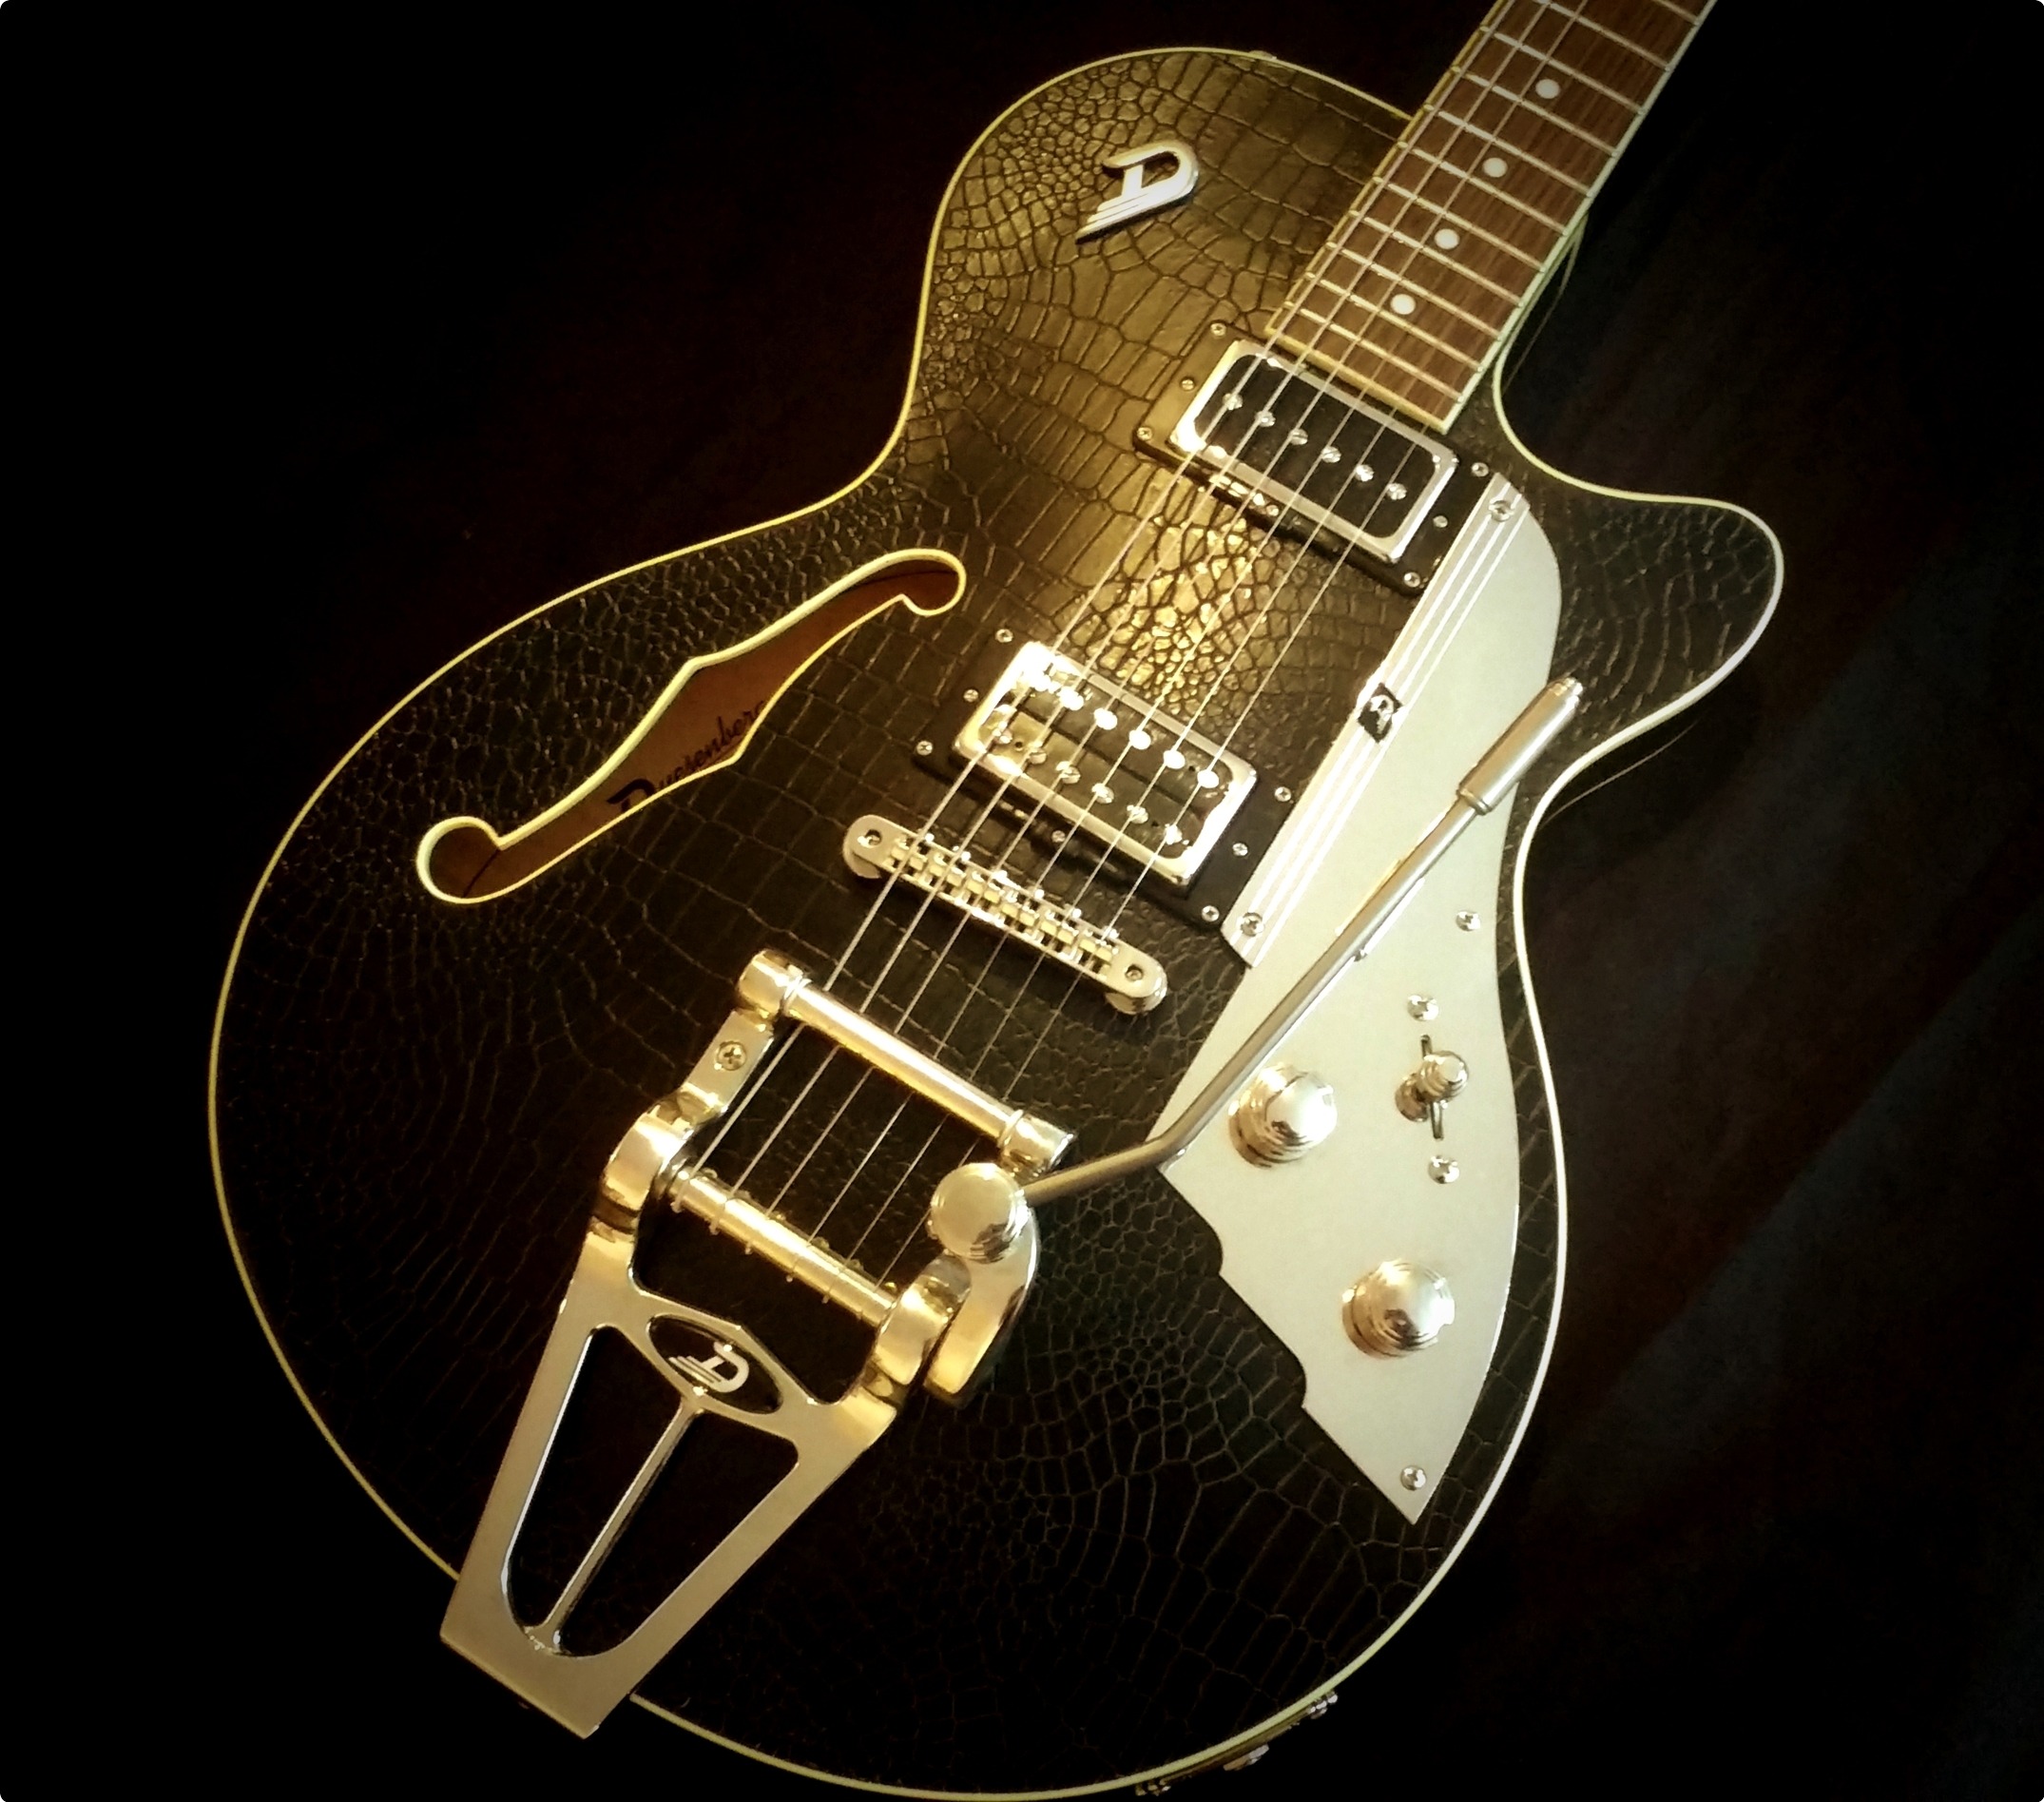 Duesenberg Starplayer TV Outlaw 2012 Skai Leather Guitar For Sale ...